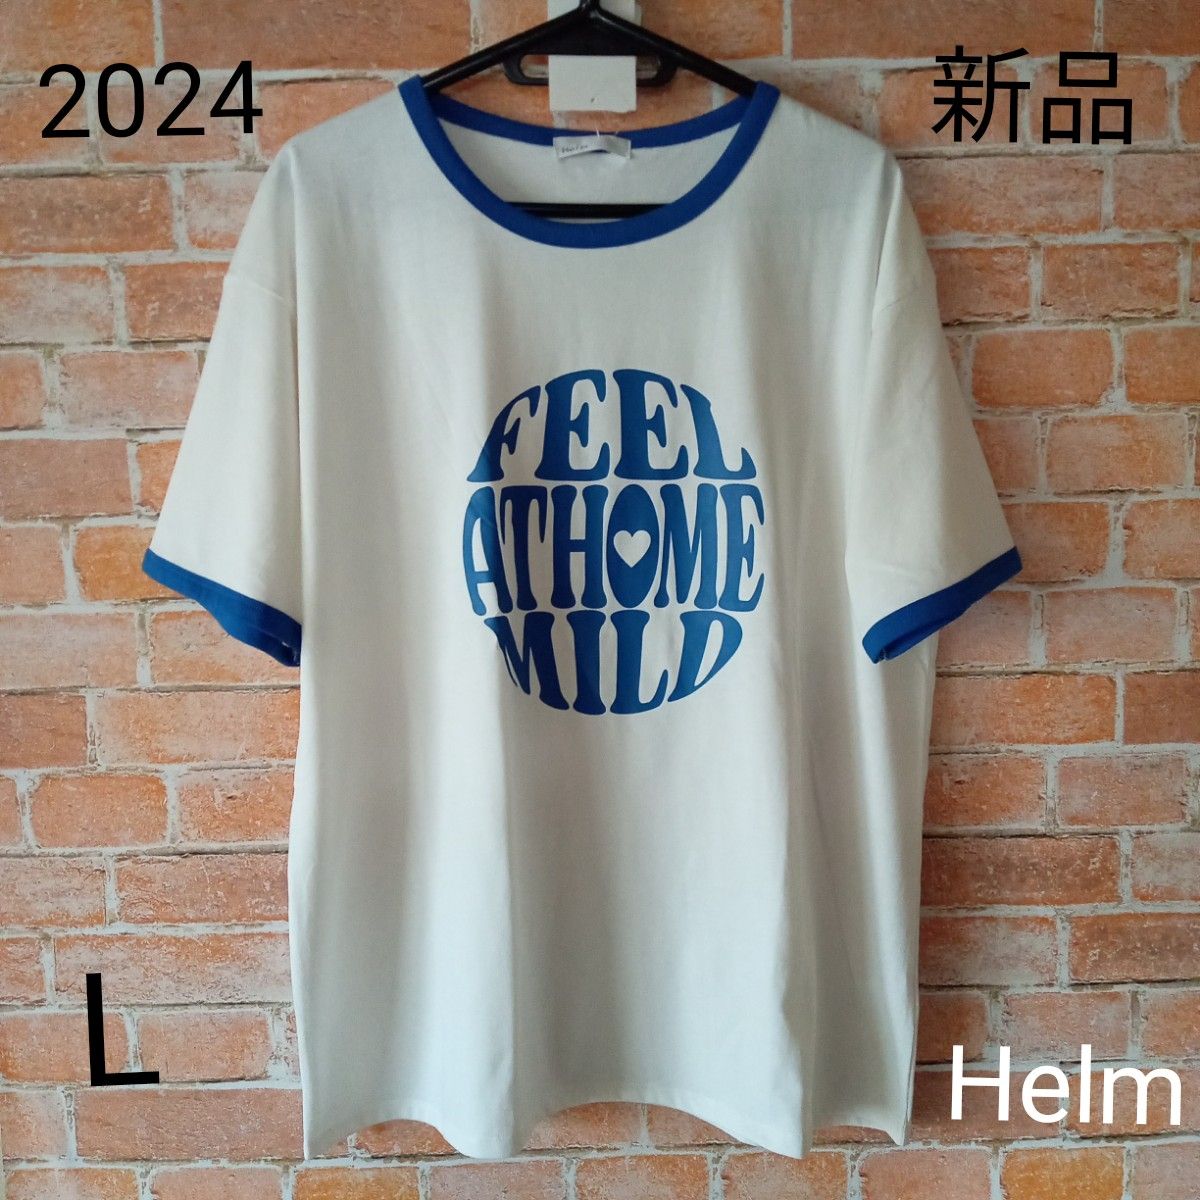  Helm（ヘルム）のサークルリンガーtシャツ。L、ブルー×オフ白。タグ付き新品未使用2024。★価格相談なし・他サイト出品中。